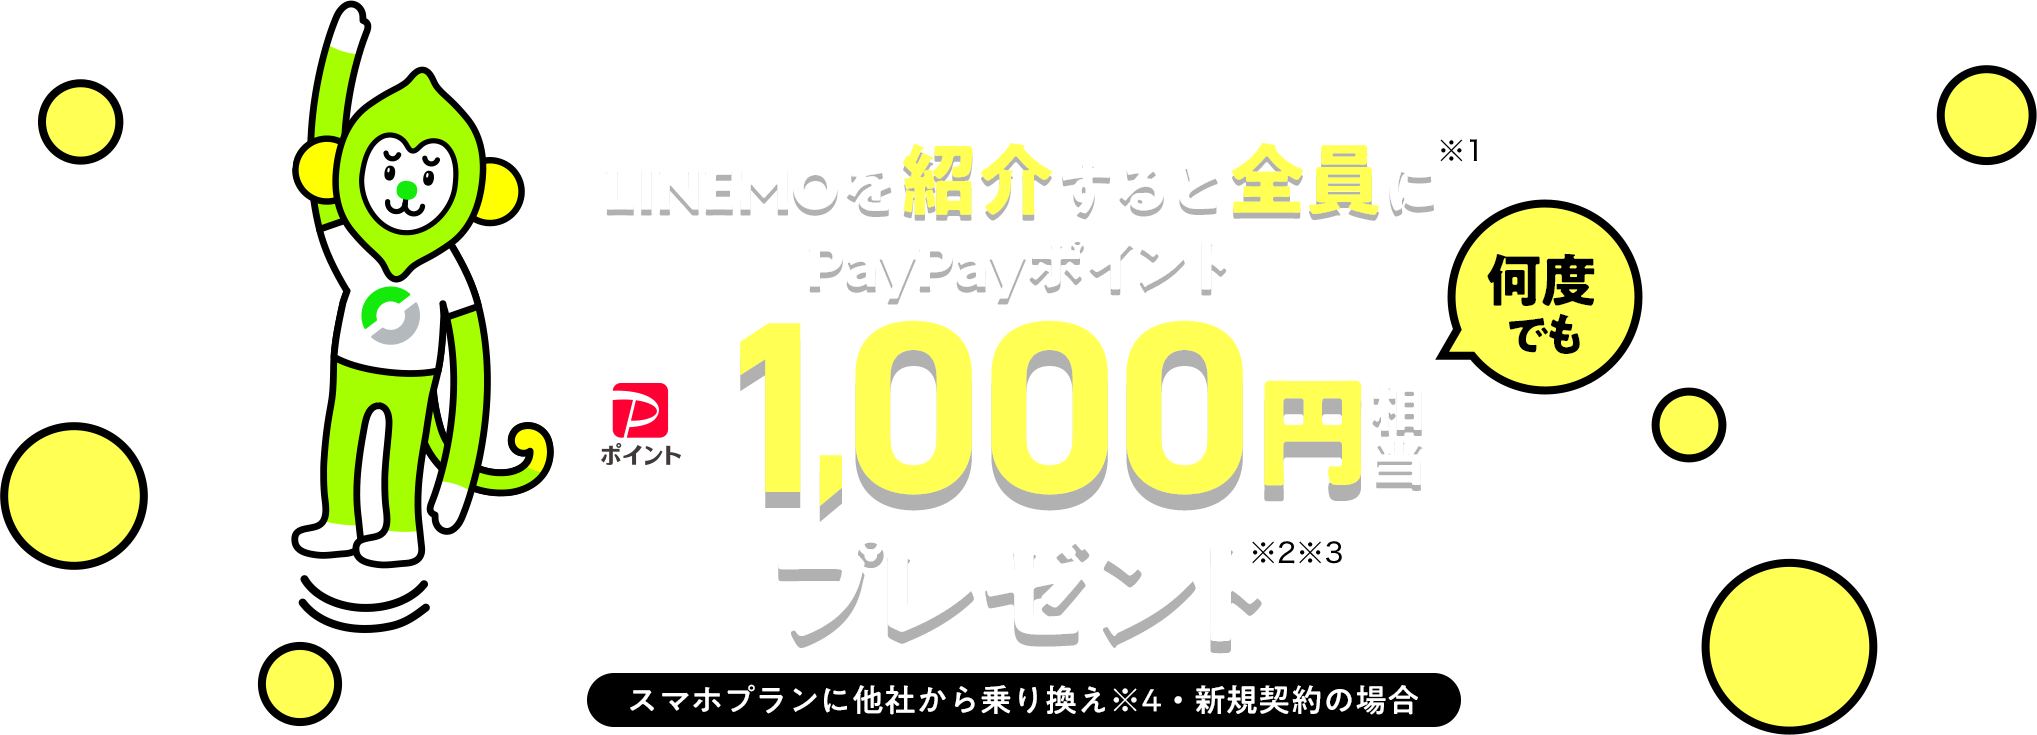 LINEMOを紹介すると全員に何度でも（※1）PayPayポイント1,000円相当プレゼント（※2※3）。スマホプランに他社から乗り換え（※4）・新規契約の場合。